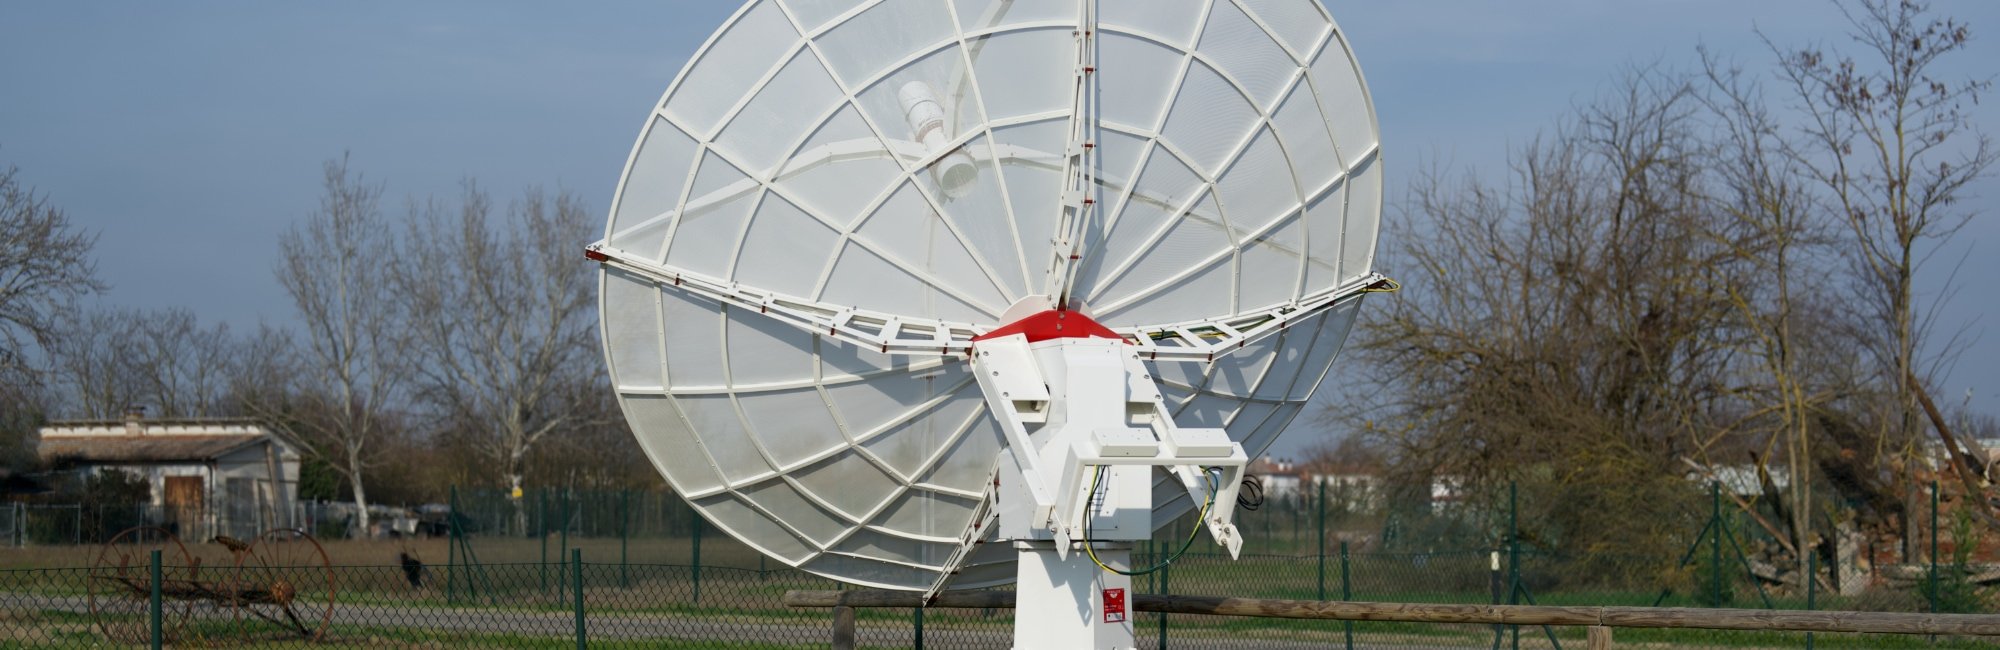 SPIDER 300A 3.0 meter diameter advanced radio telescope